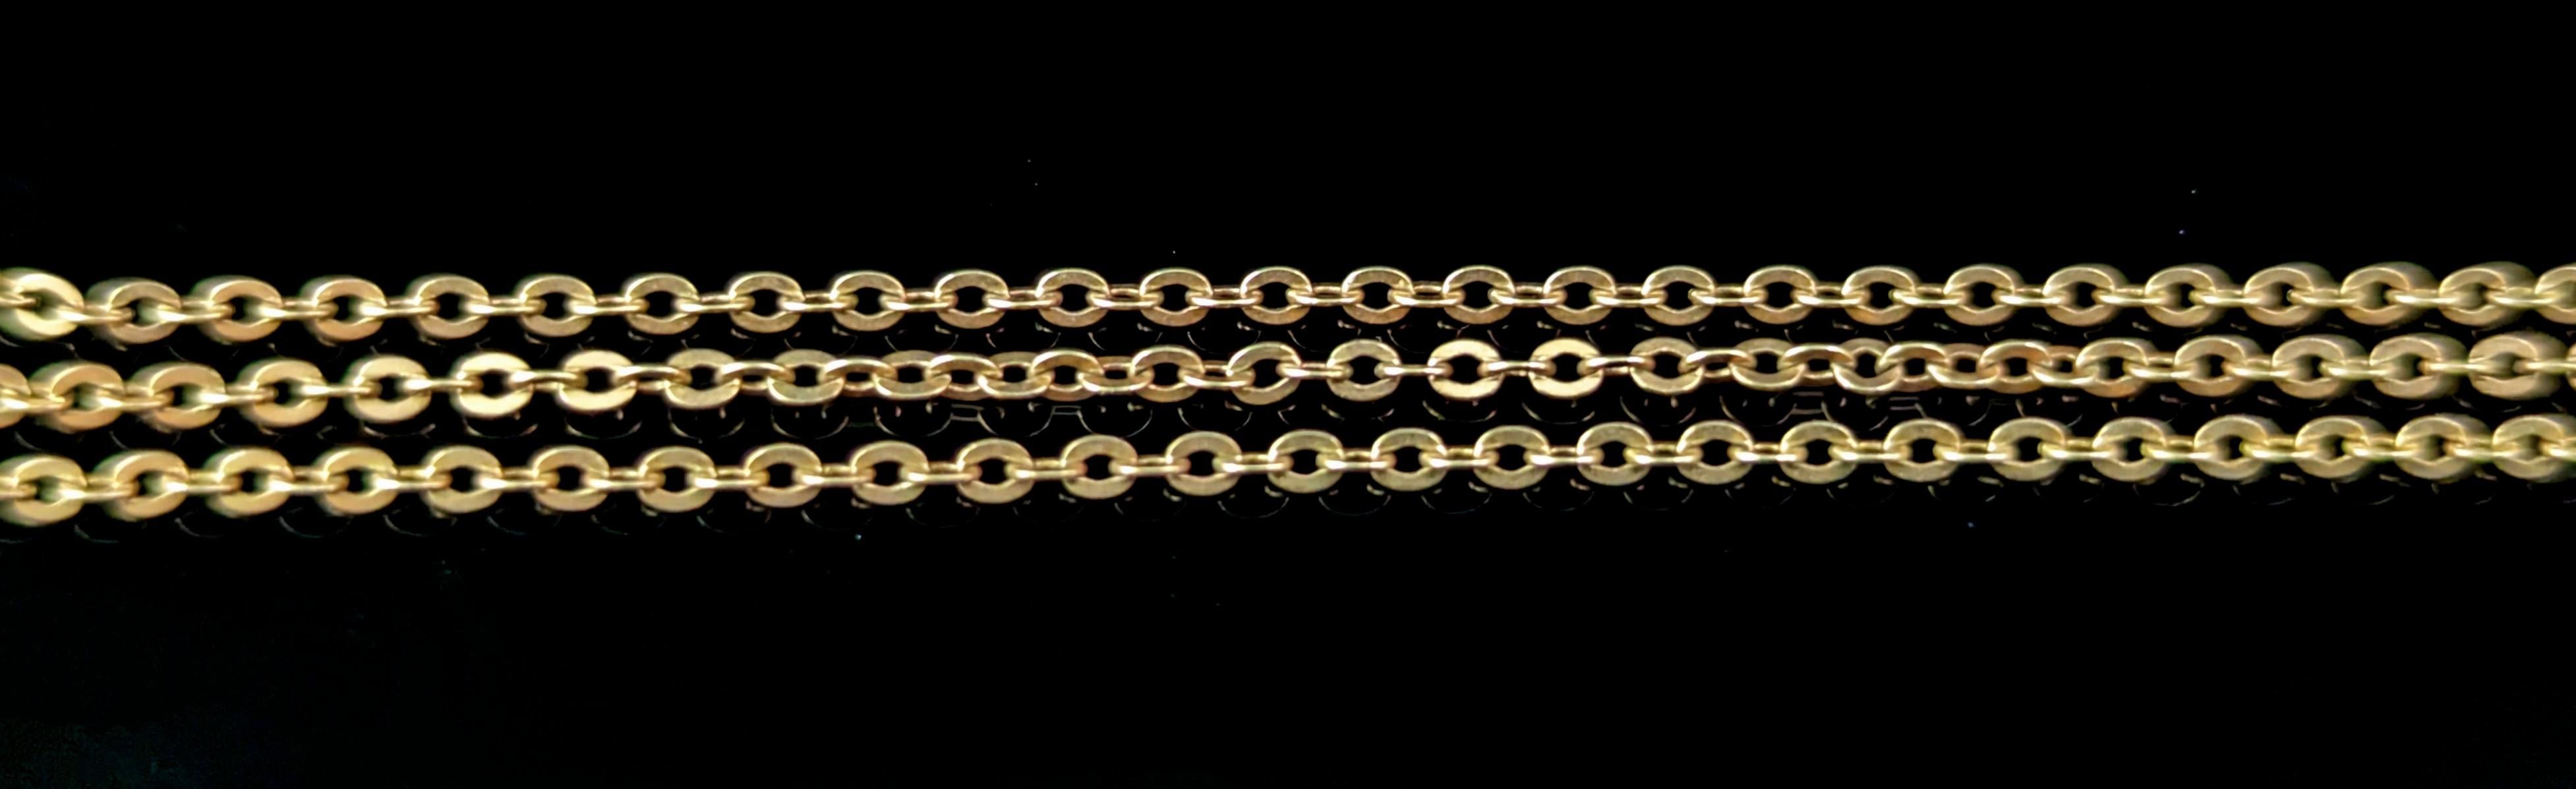 Antique 9k gold trace link chain necklace, Edwardian  1